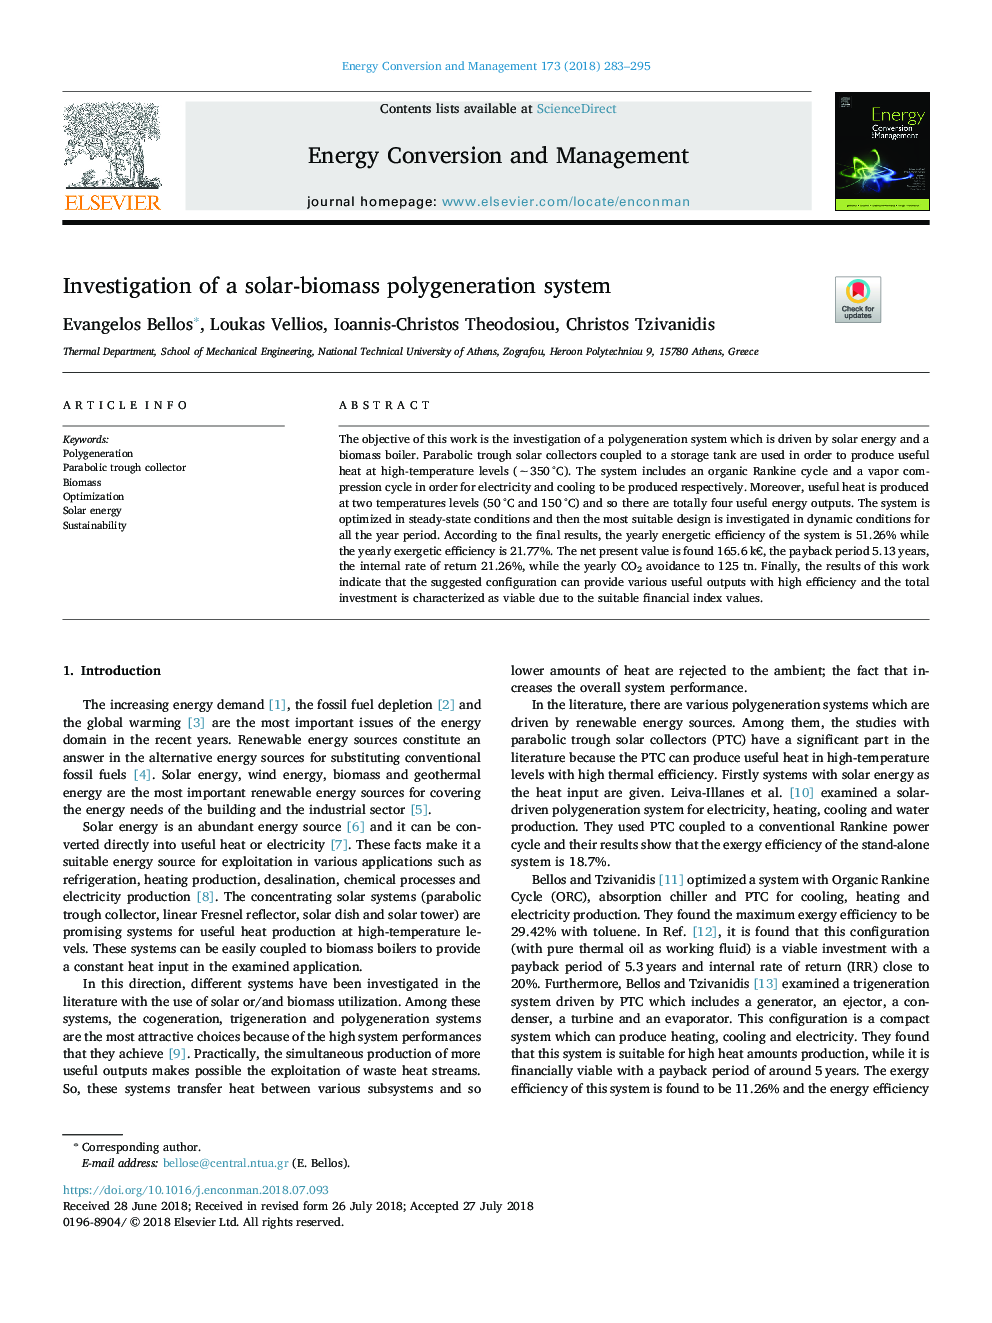 Investigation of a solar-biomass polygeneration system